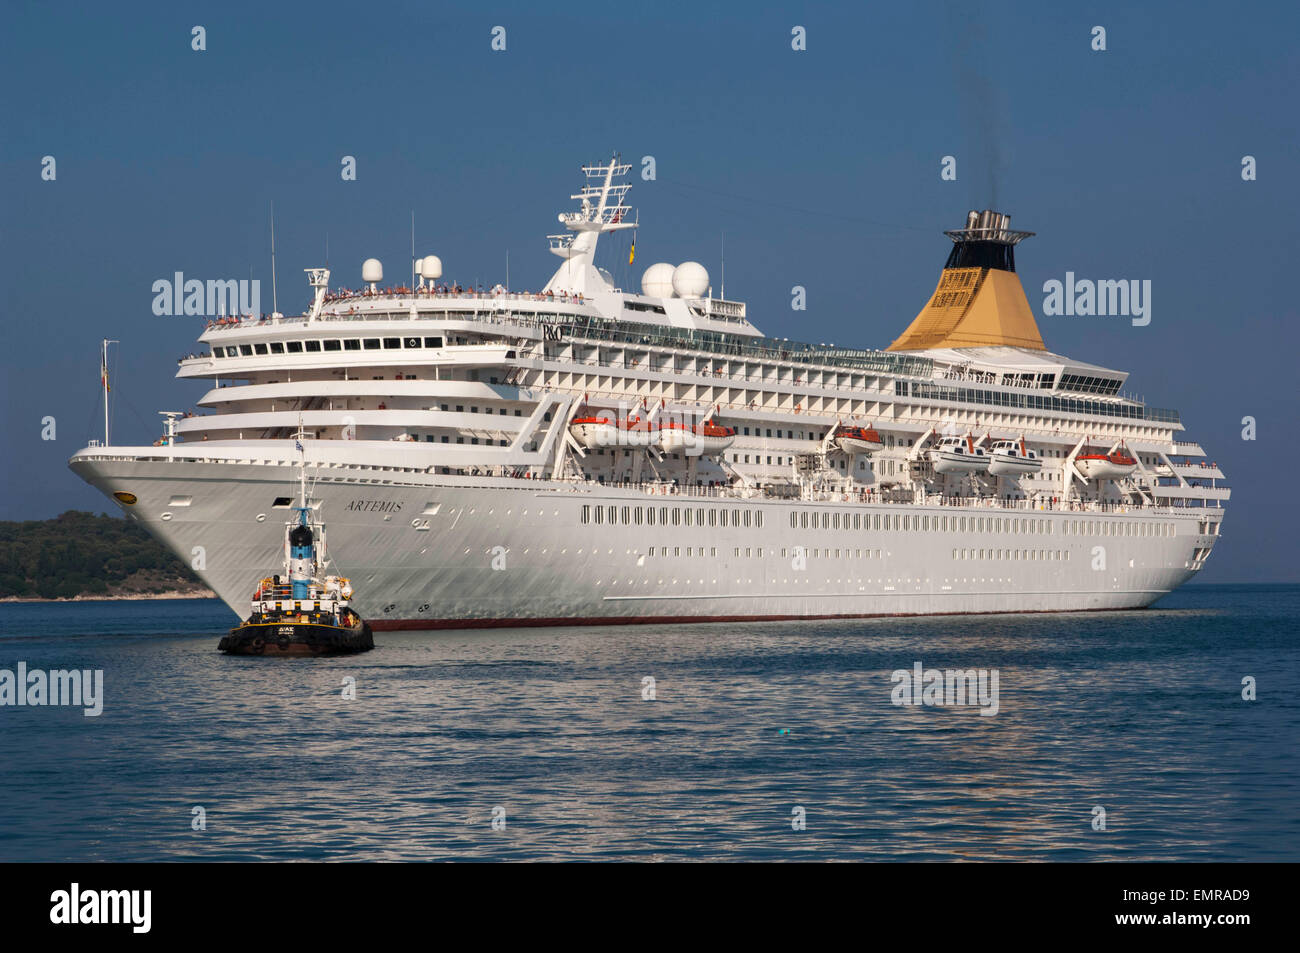 CORFU/GREECE 3RD OCTOBER 2006 - Cruise Ship Artemis entering port in Mediterranean region Stock Photo